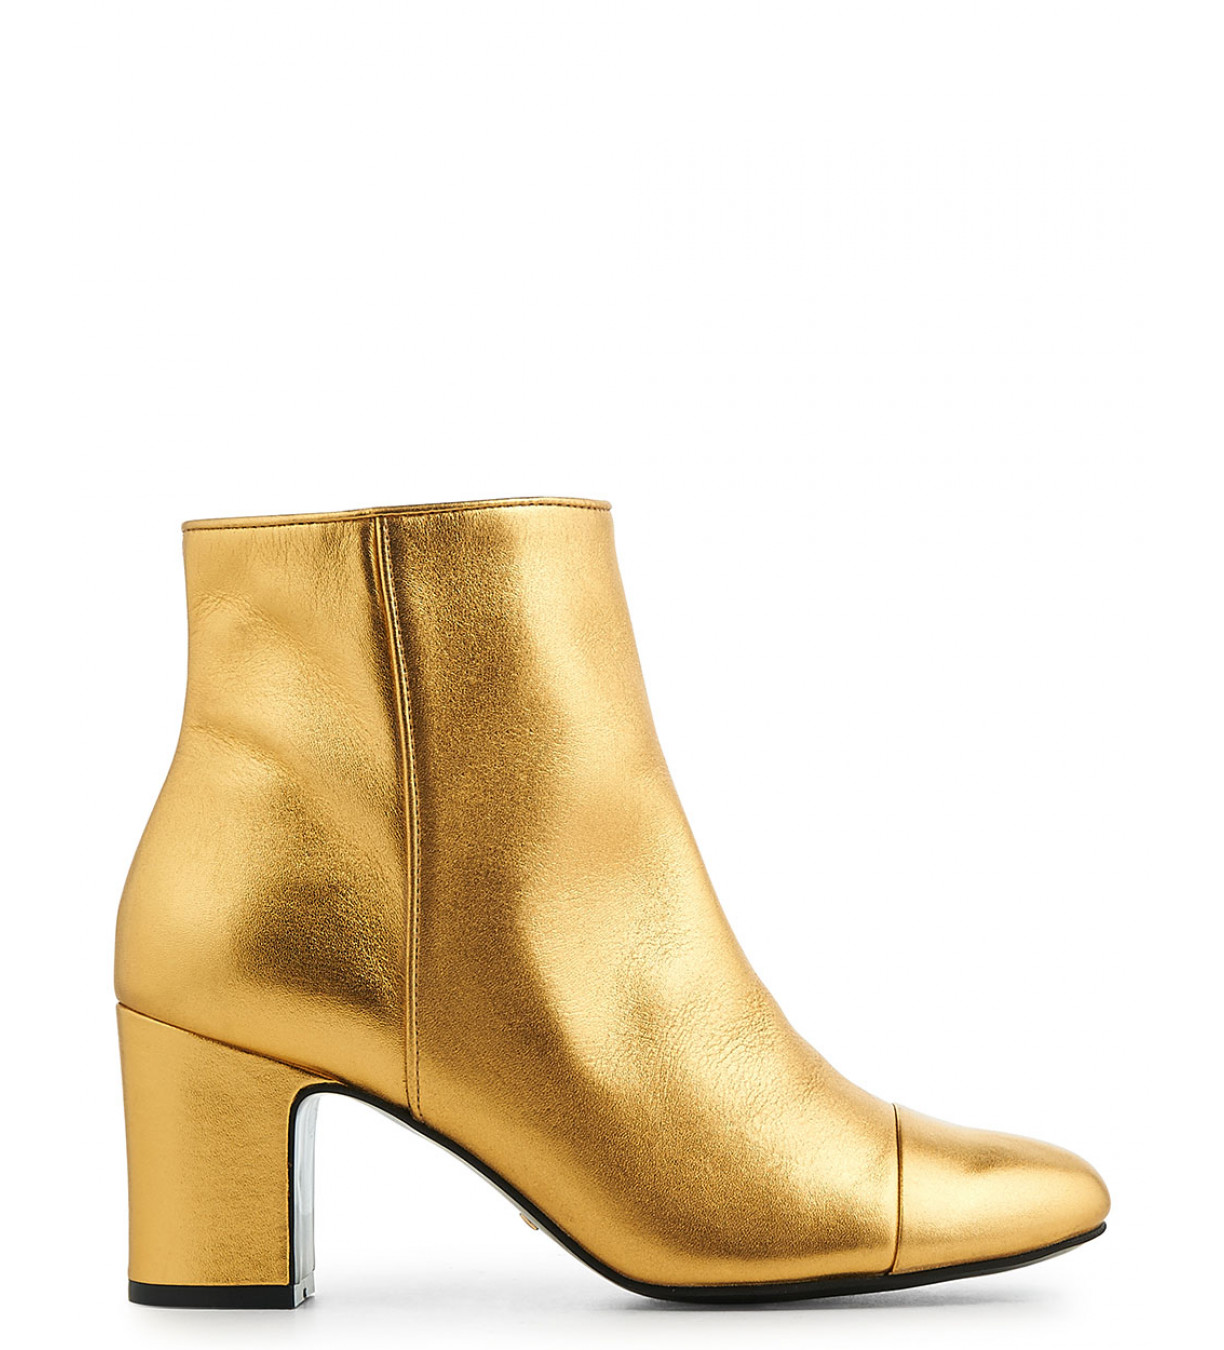 14. boots-graziela-cuir-metalise-veau-or-chaussures-mariee